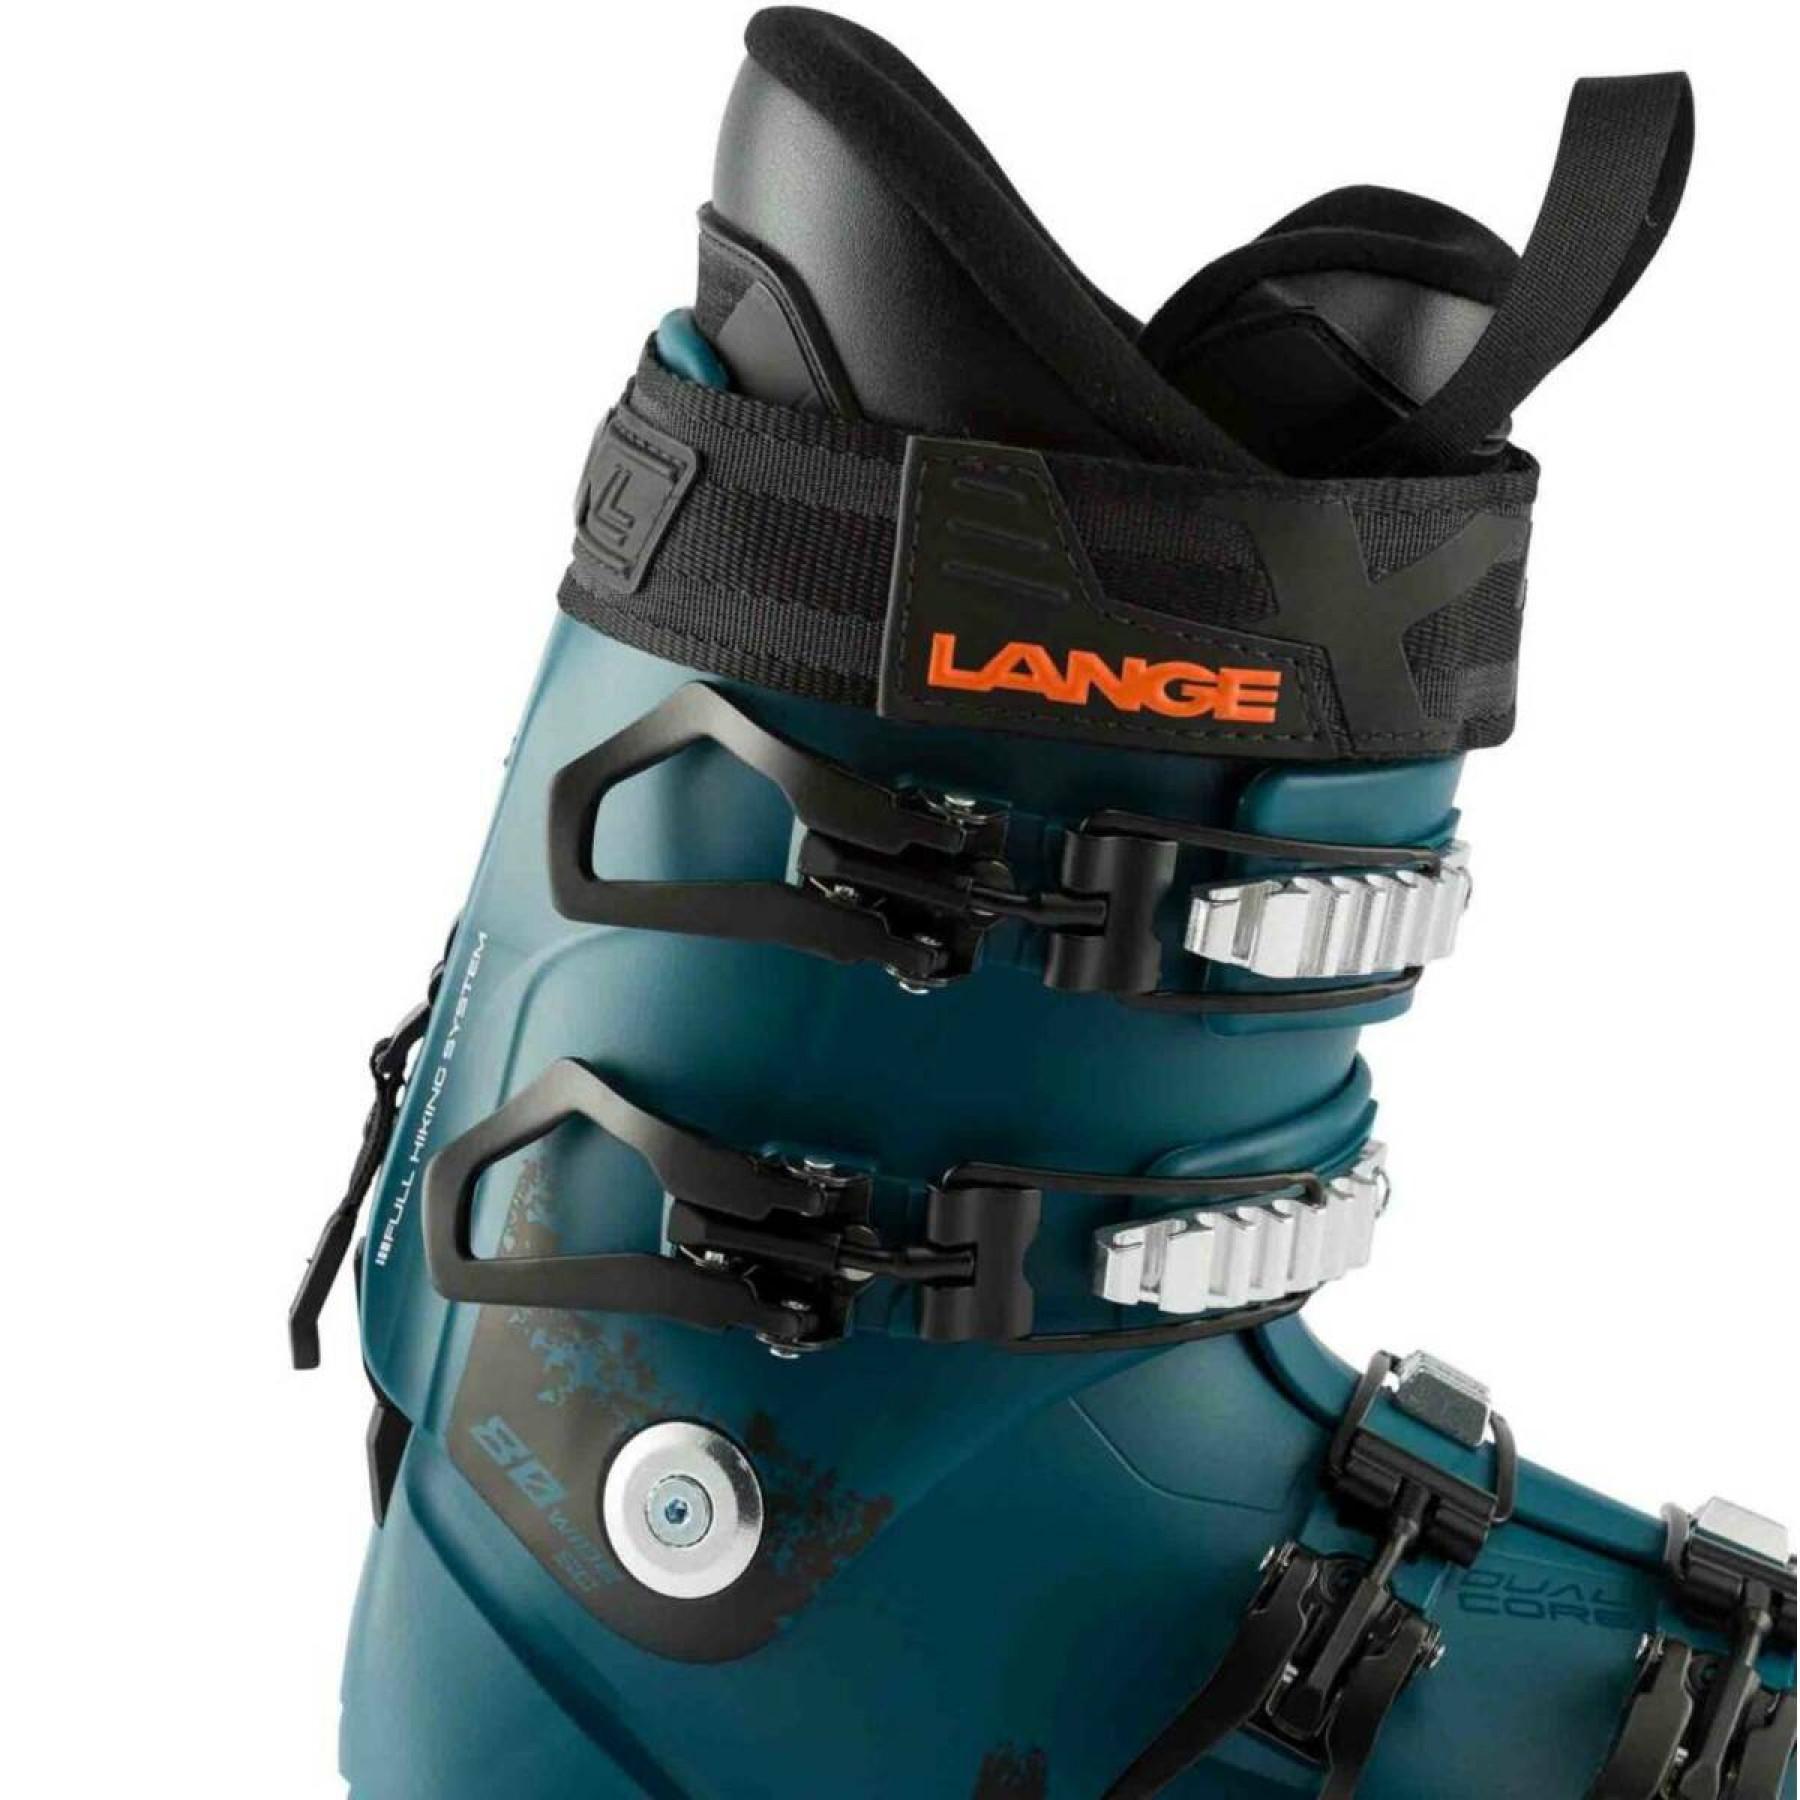 Children's ski boots Lange xt3 80 wide sc